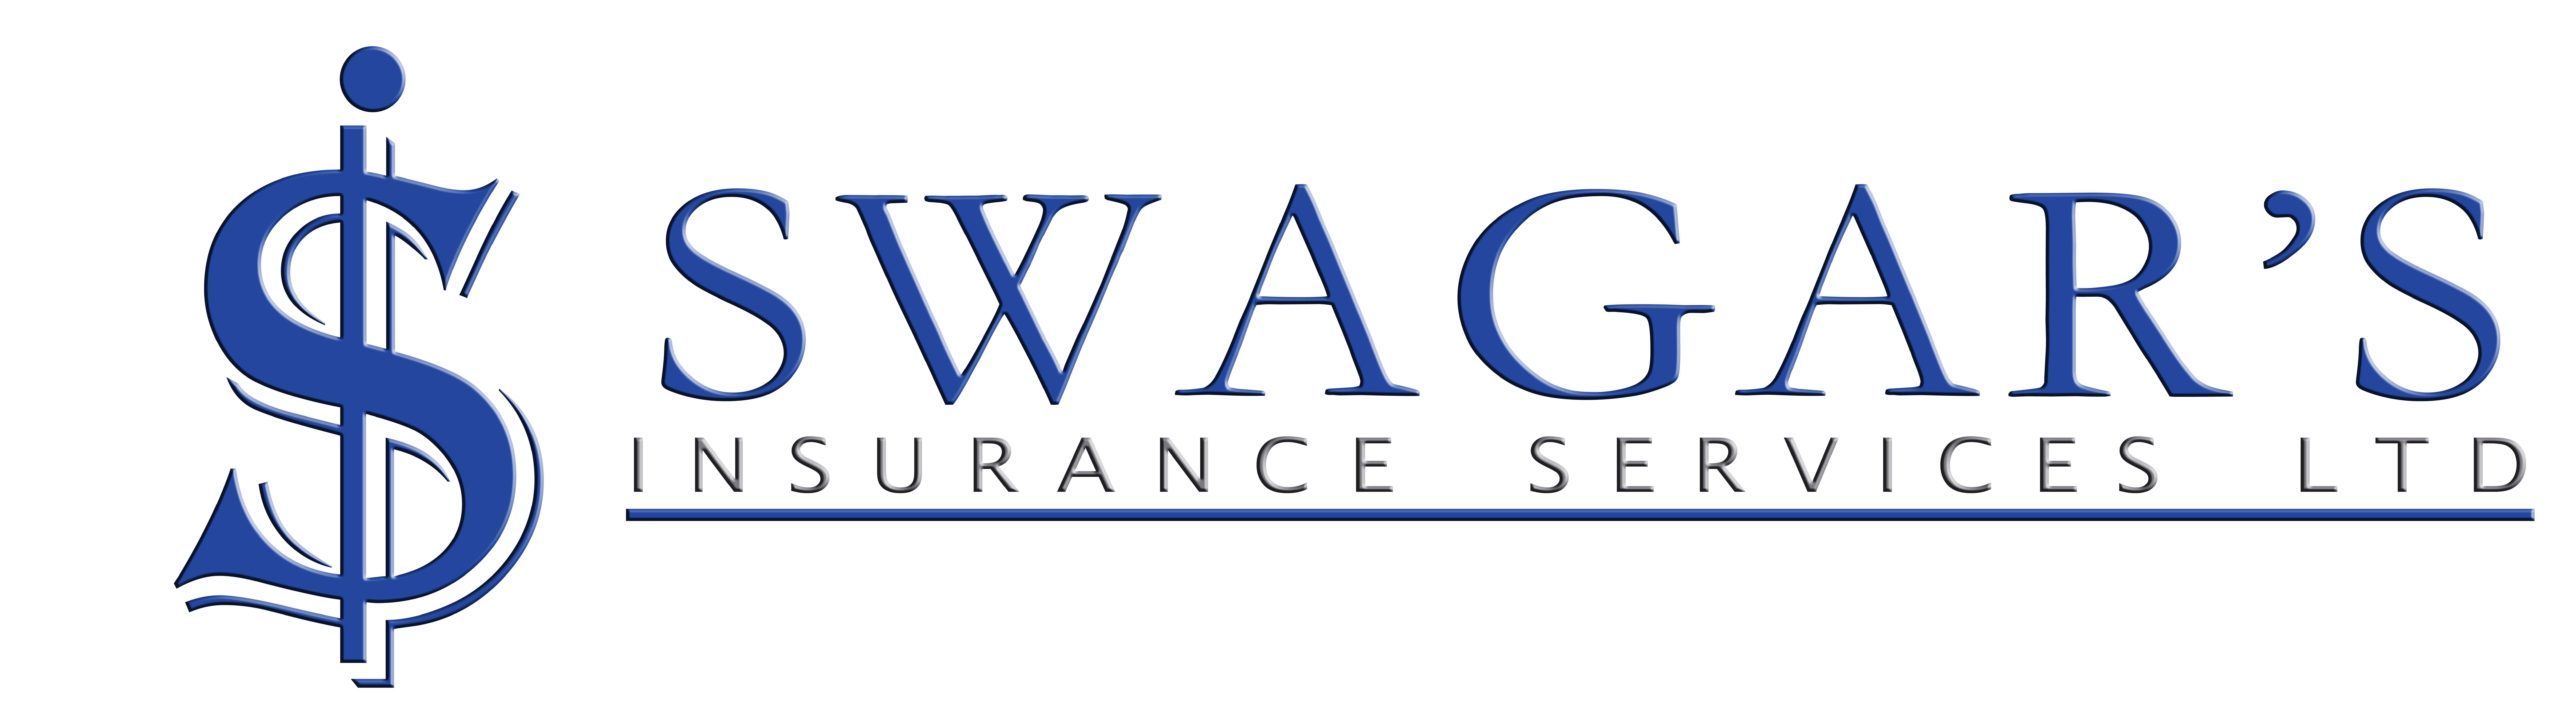 Swagars Insurance Services Ltd